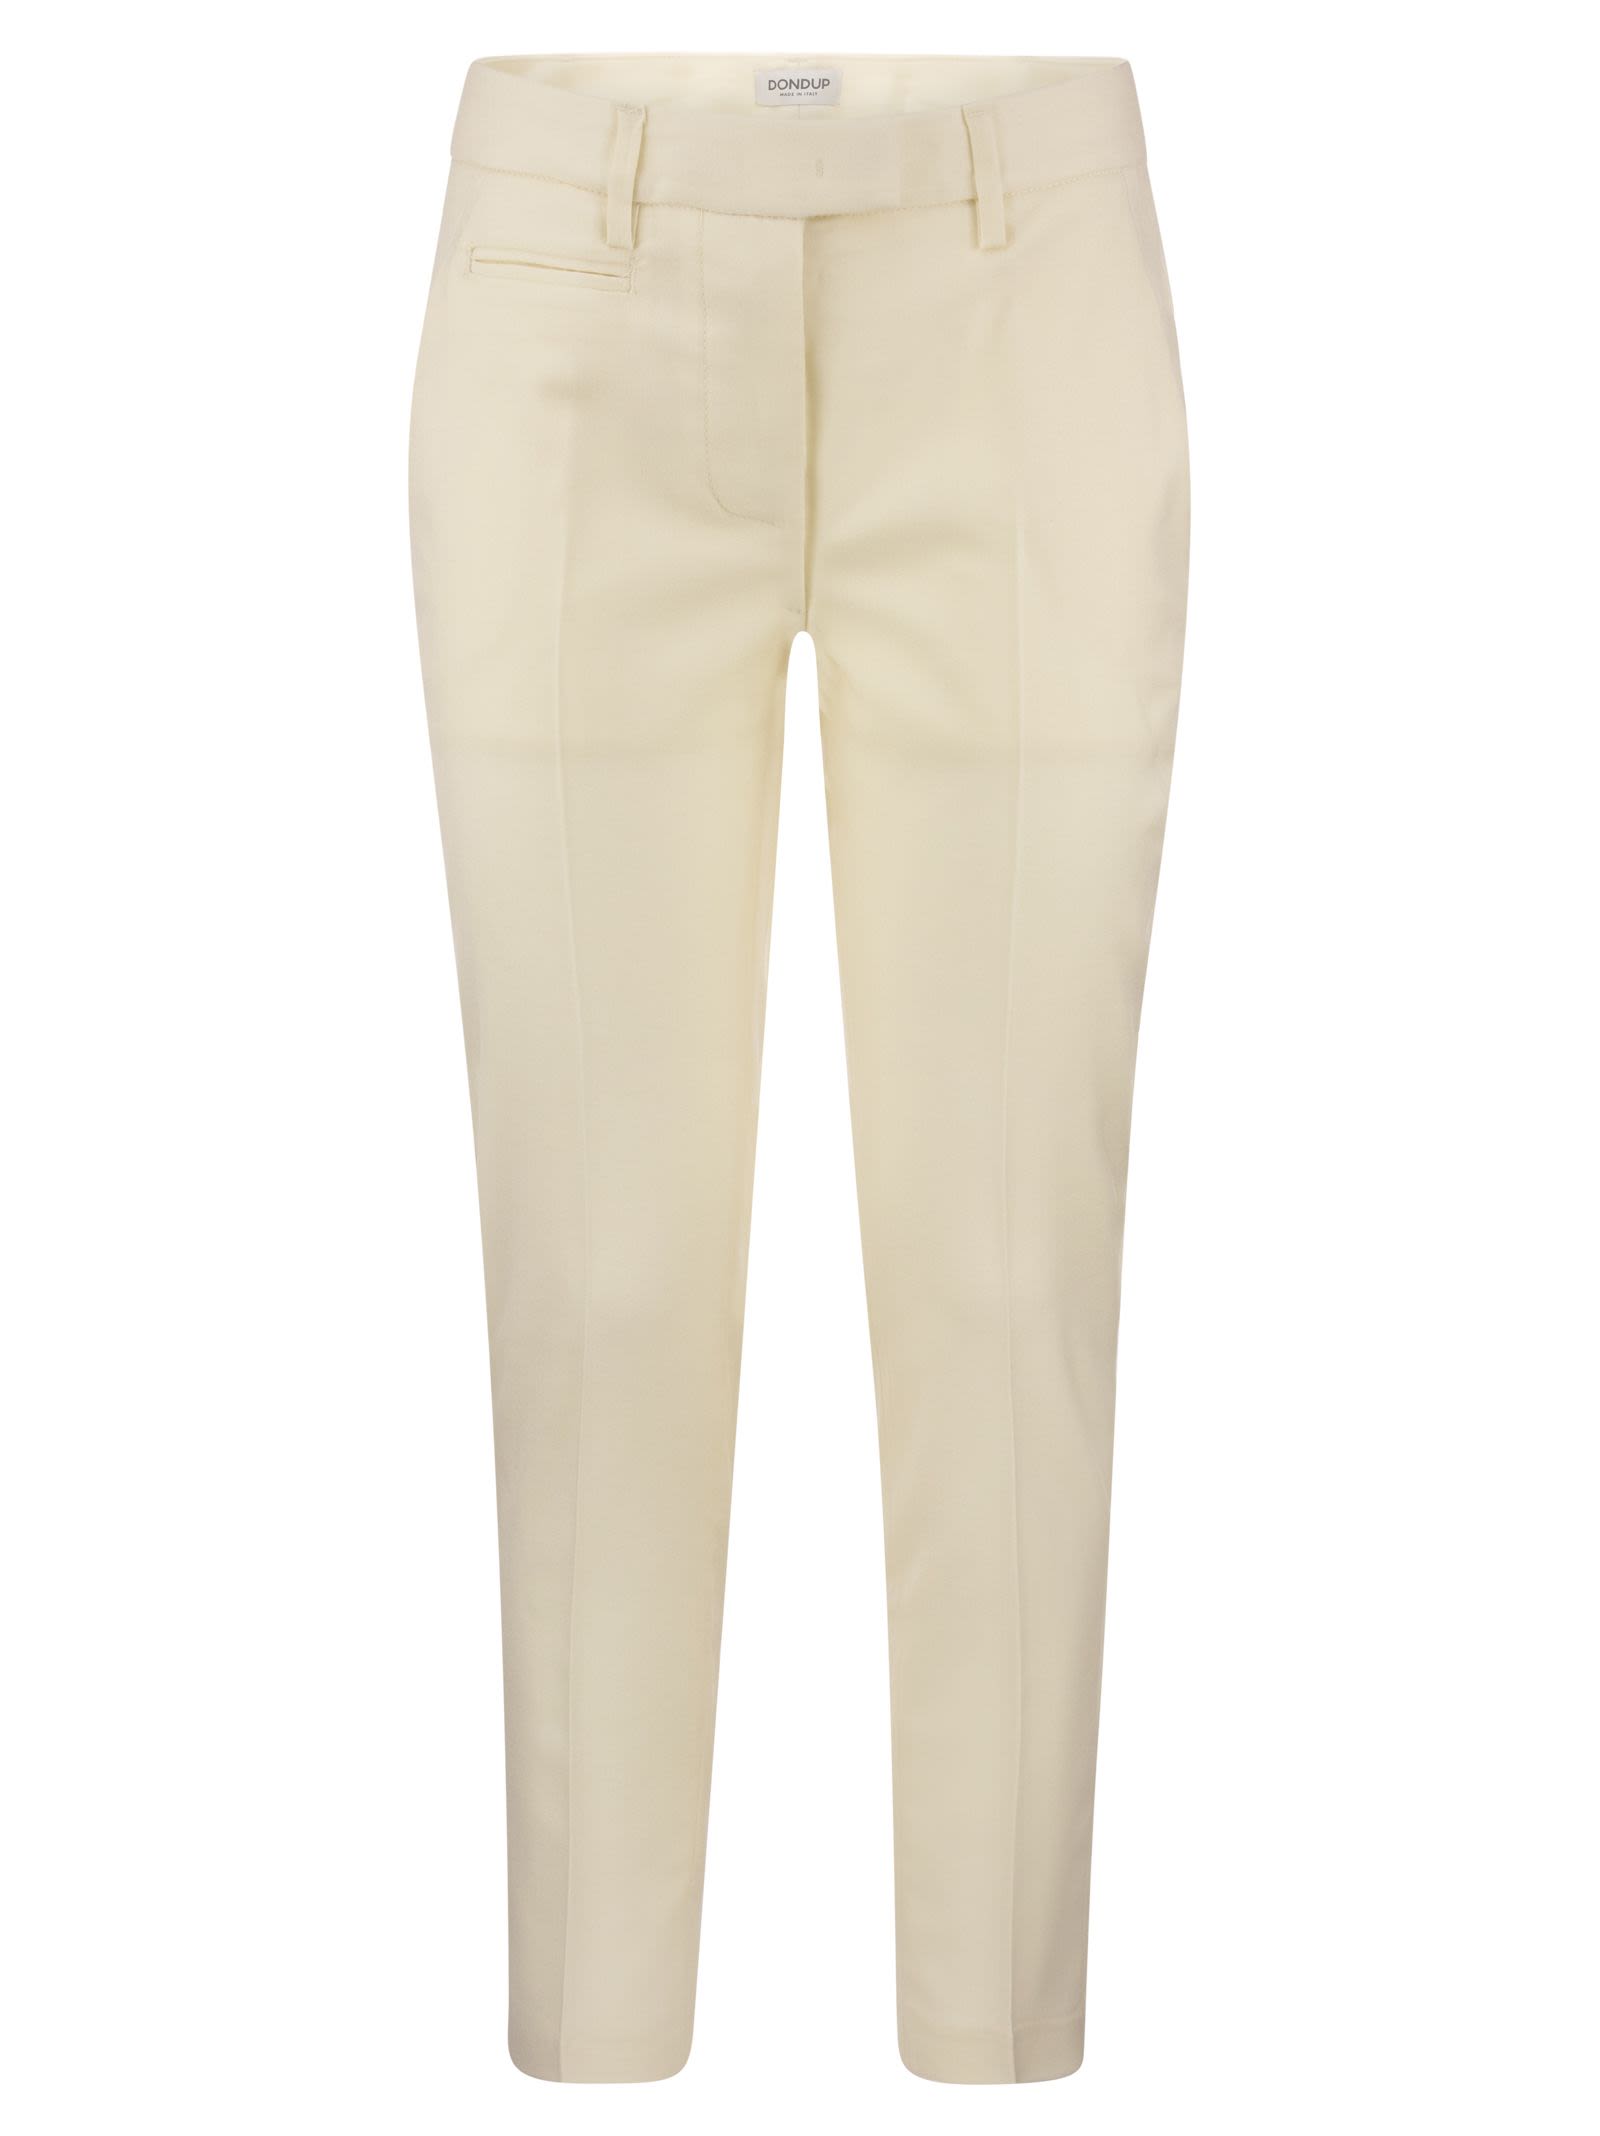 PERFECT - Pantaloni slim fit in lana - Bellettini.com